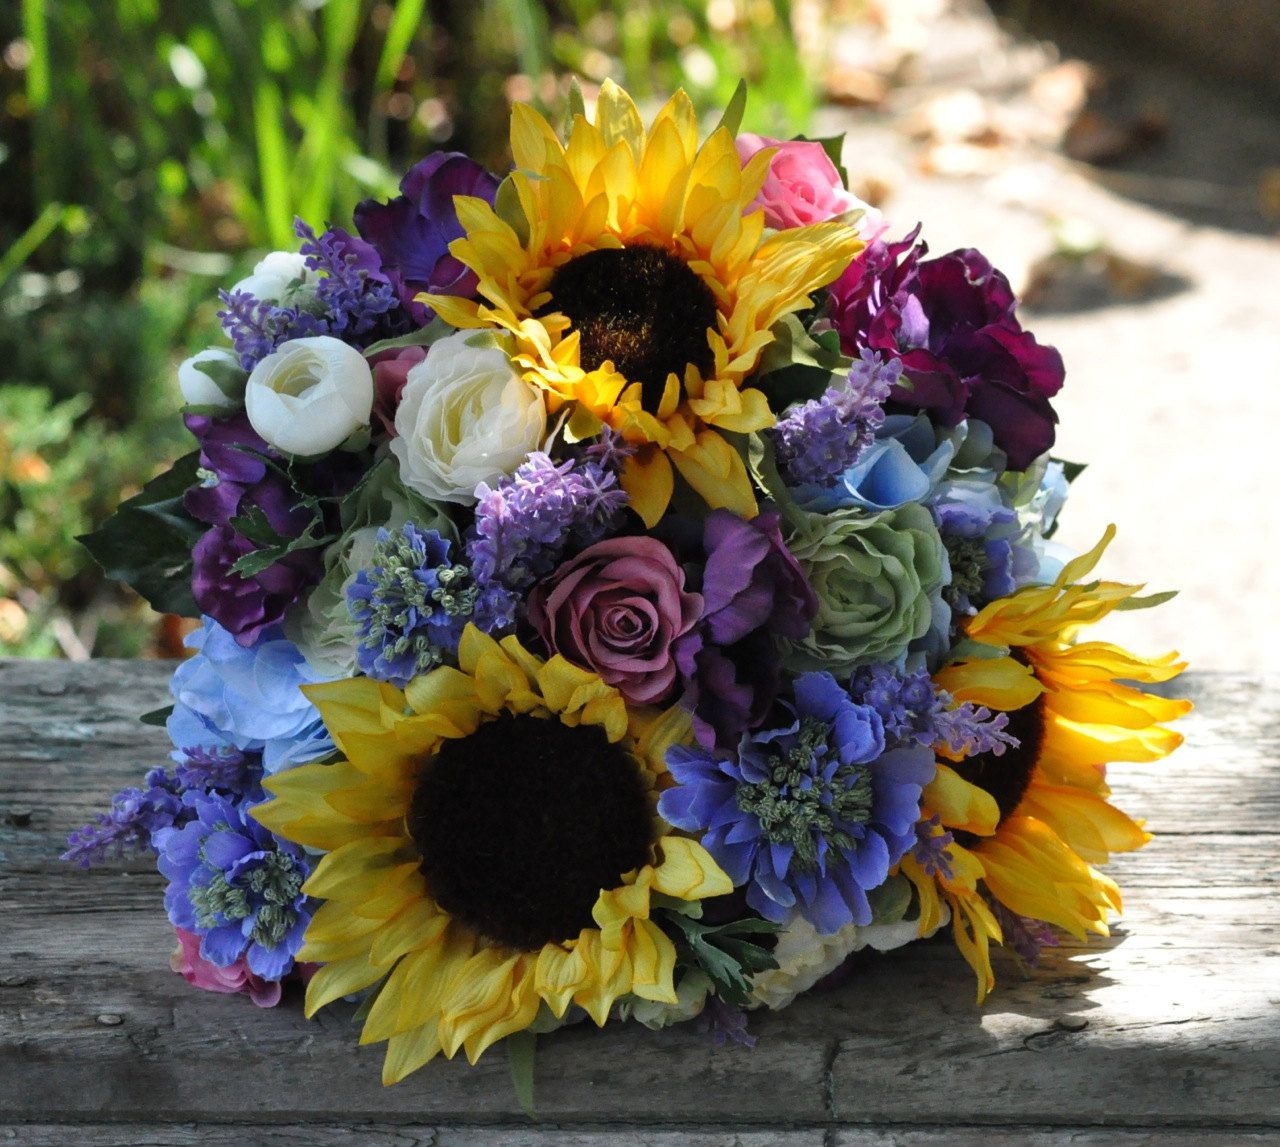 Sunflower flower arrangements